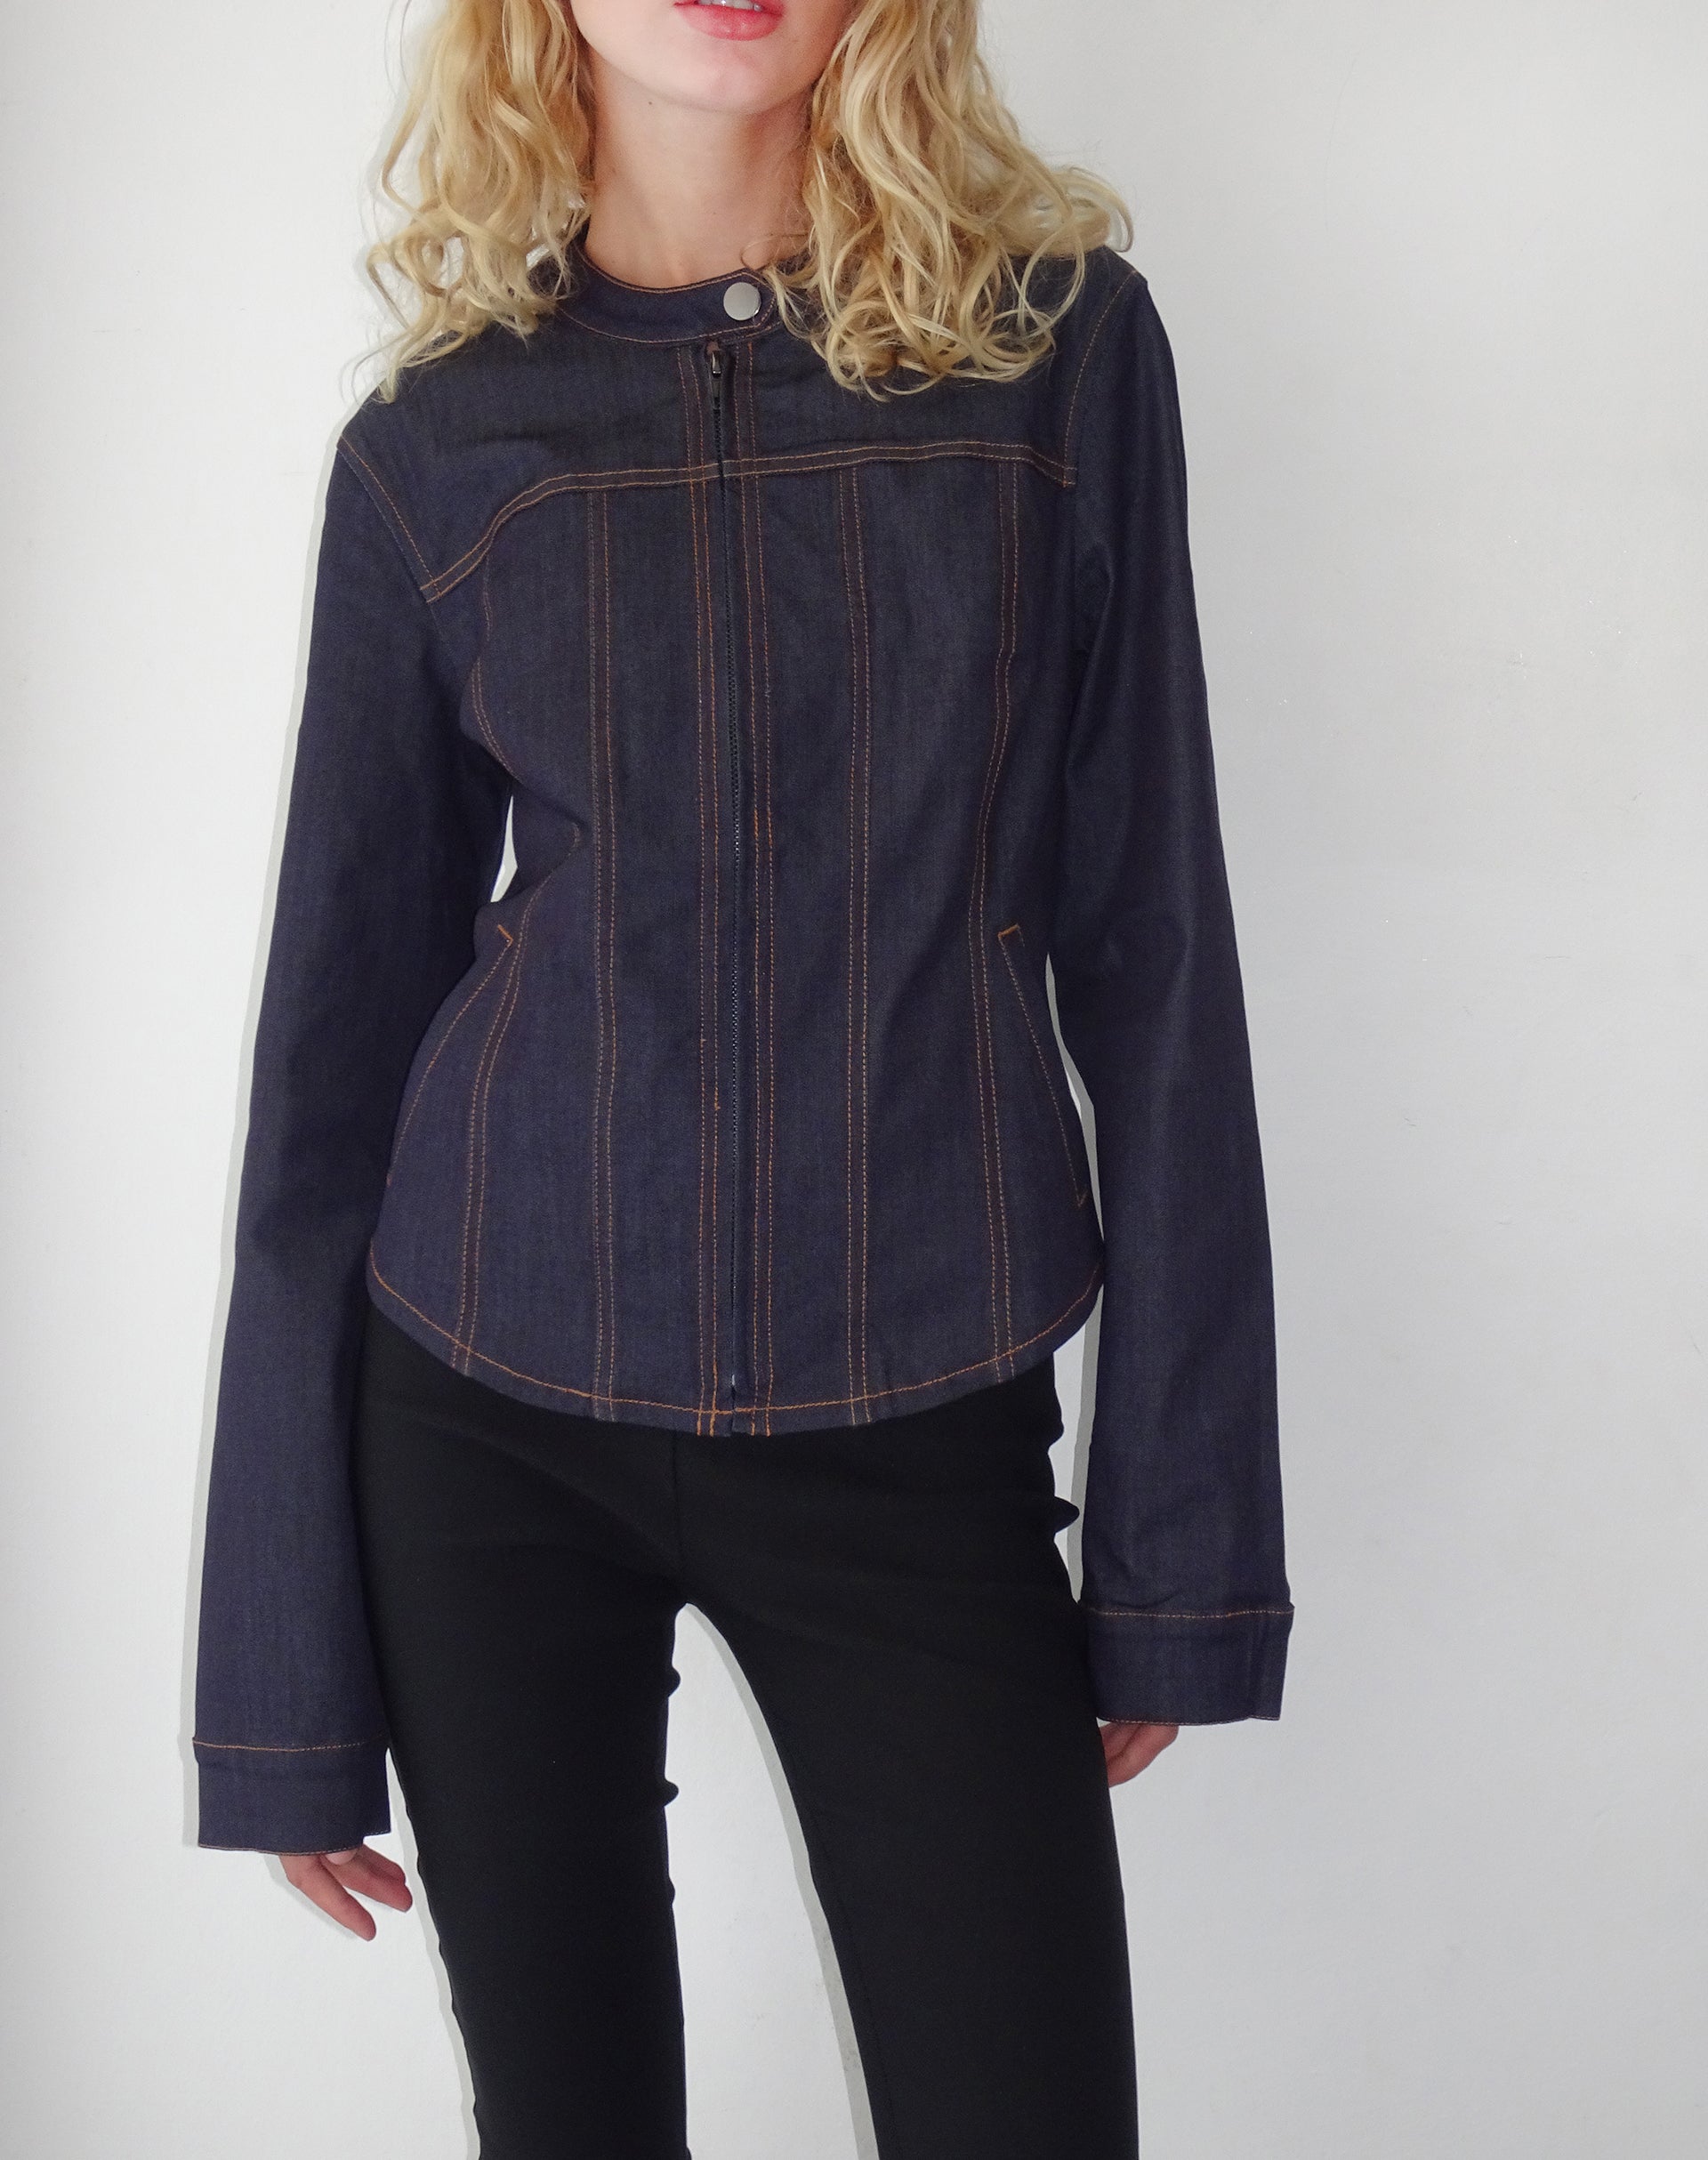 Womens Size 16 12 10 8 14 Stretch Fitted Denim Jacket Frayed Jean Jackets  Blue | eBay